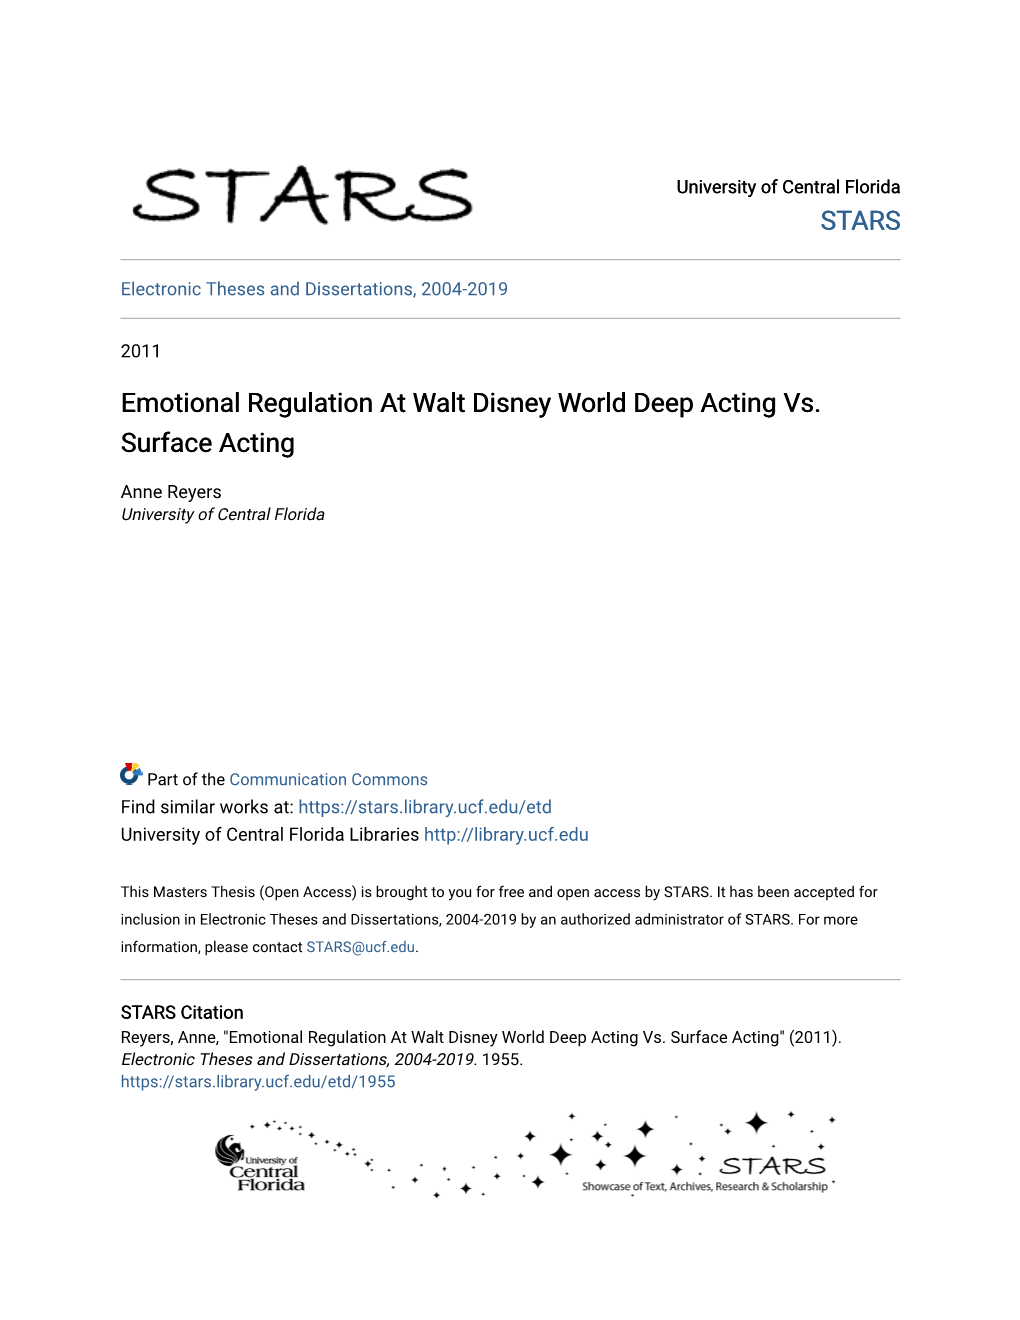 Emotional Regulation at Walt Disney World Deep Acting Vs. Surface Acting